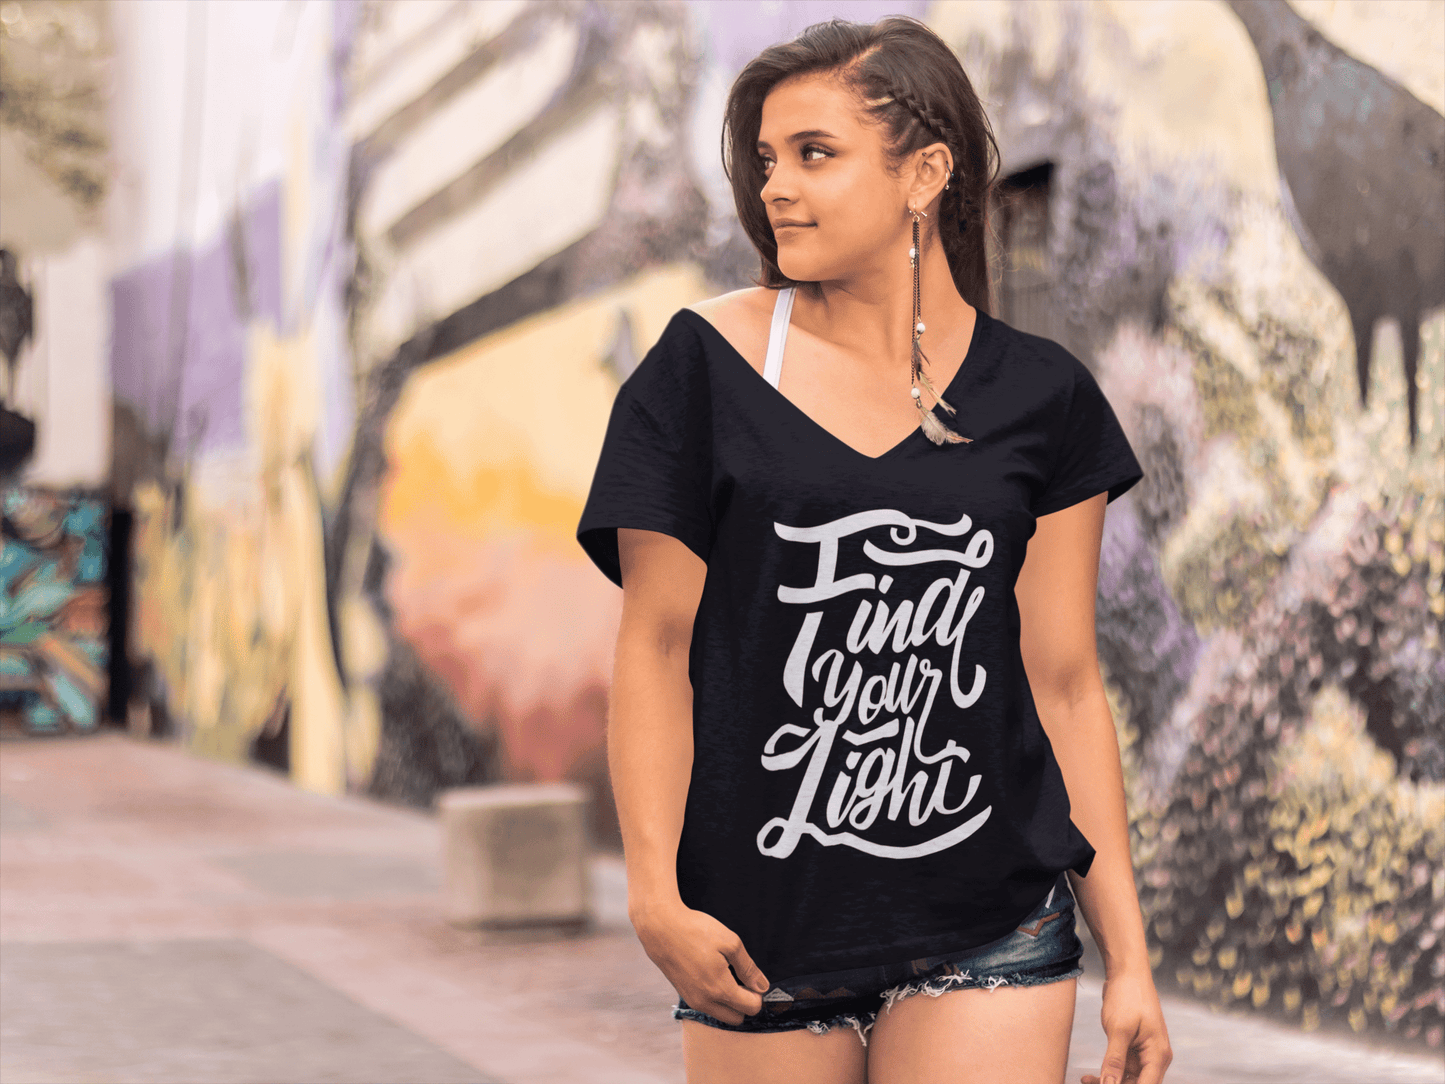 ULTRABASIC Women's T-Shirt Find Your Light - Inspiring Motivation Slogan Tee